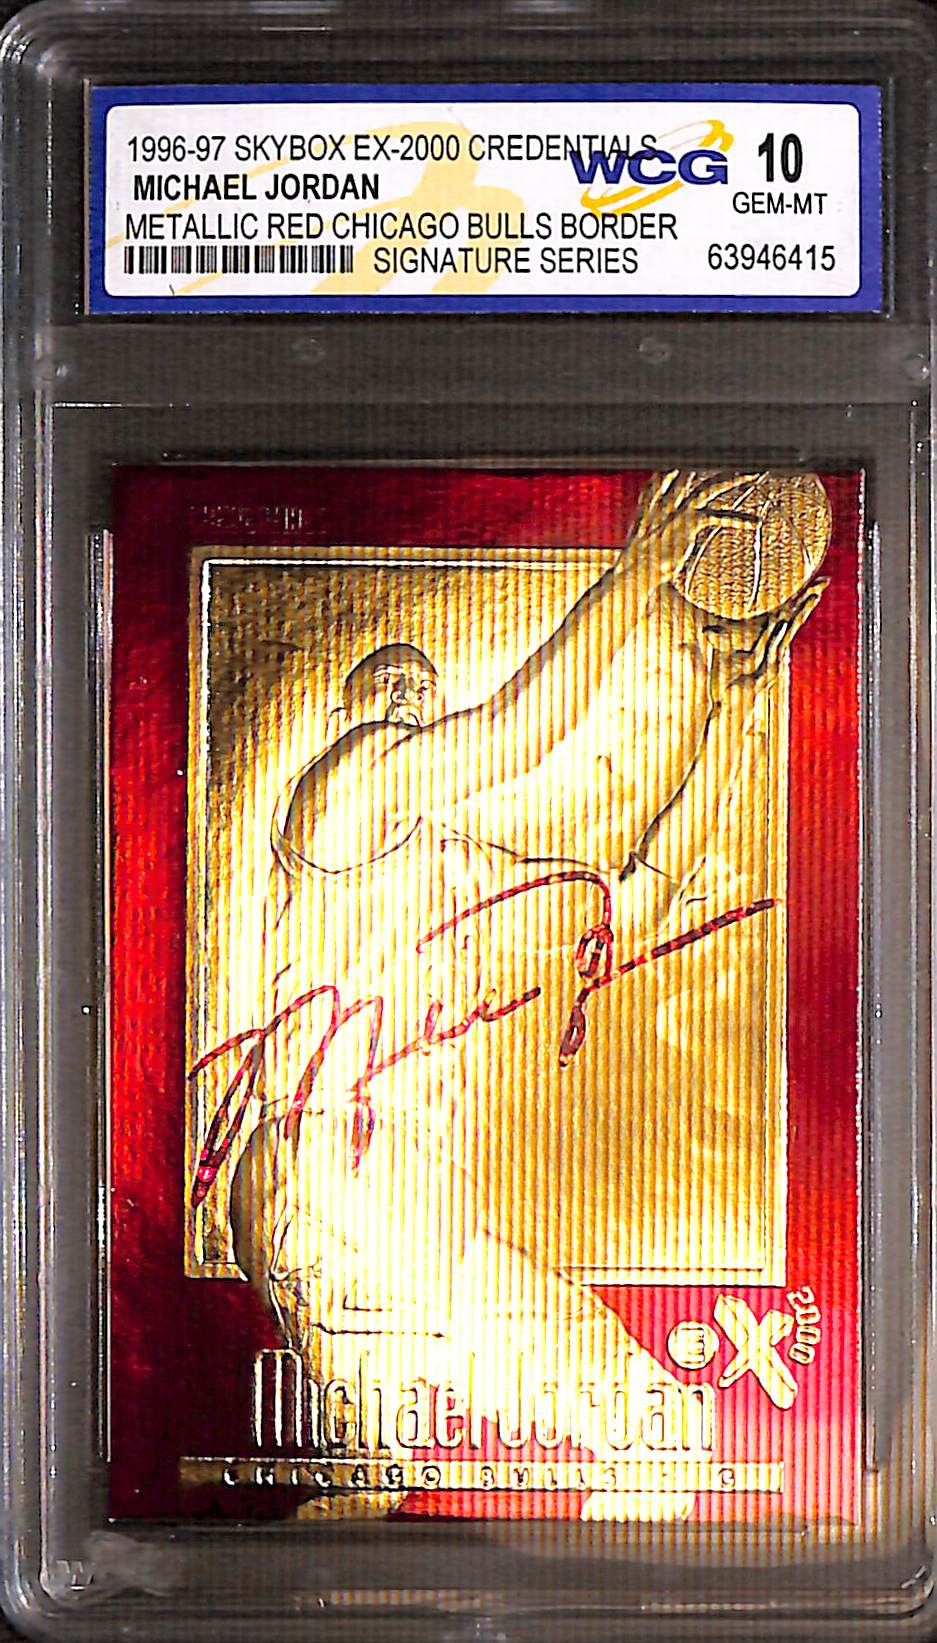 FIINR BasketBall Card 1996 Skybox Michael Jordan Metallic Red Basketball Card #15 - Graded WGC10 - Mint Condition